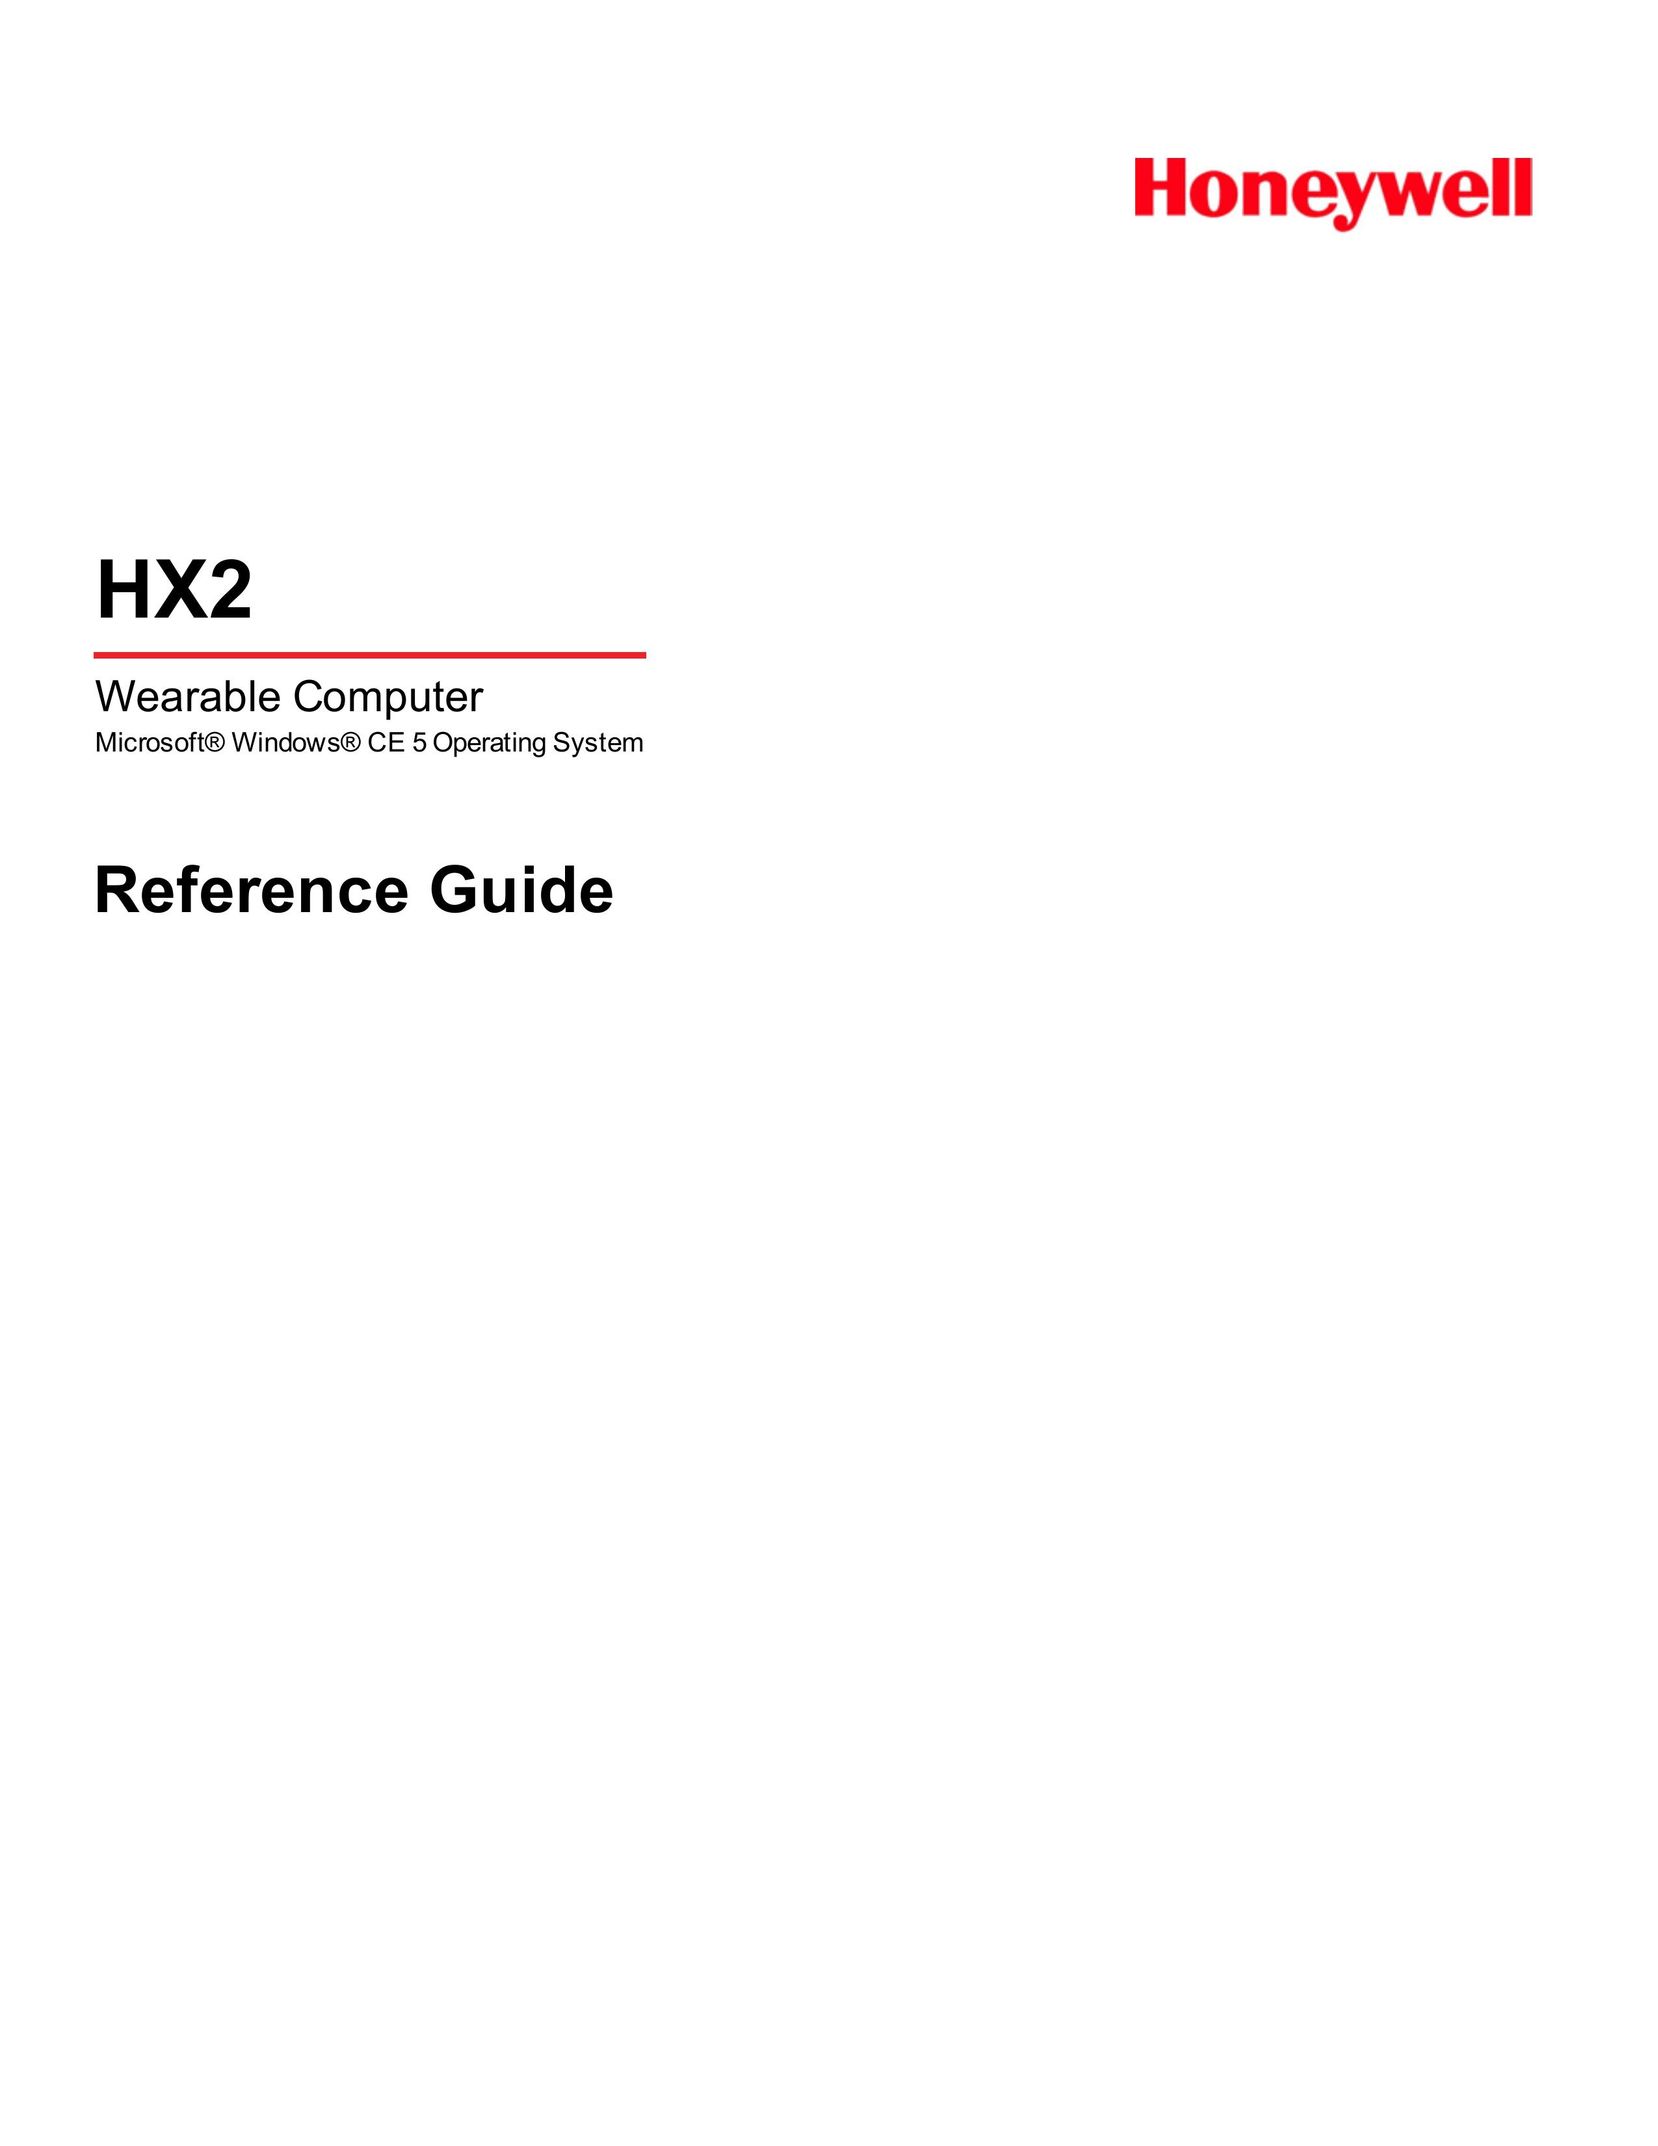 Honeywell HX2 Personal Computer User Manual